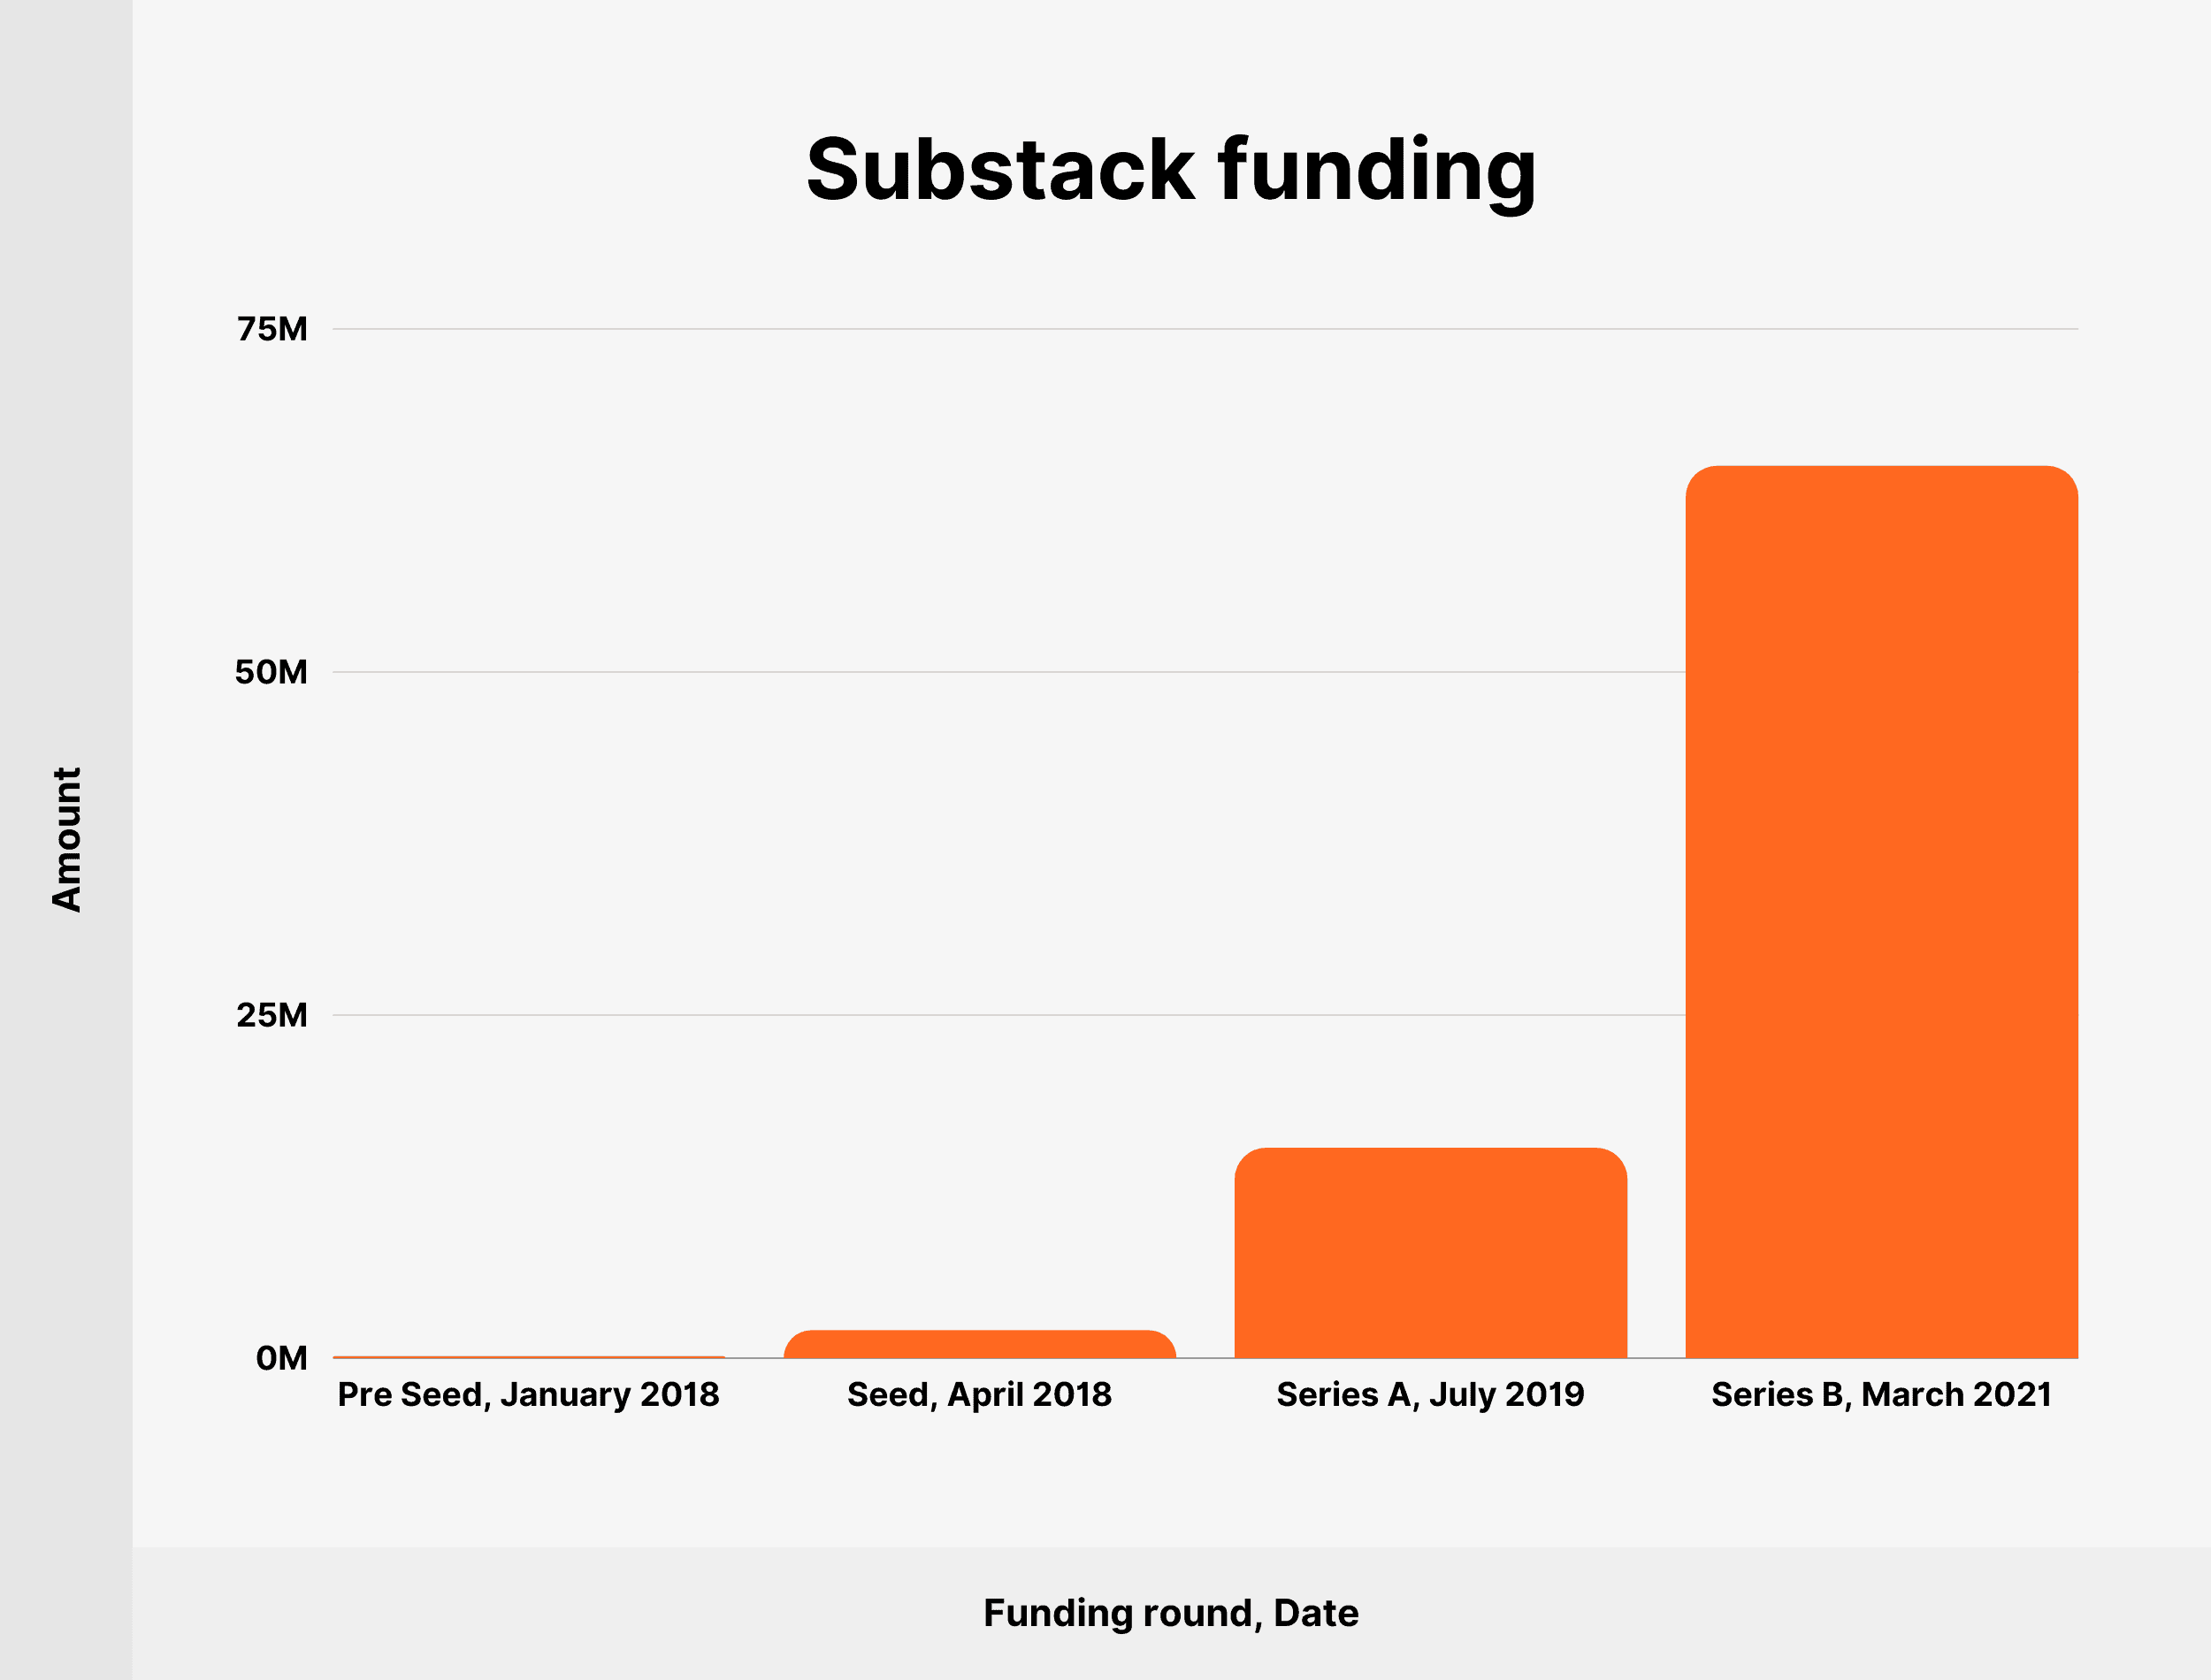 Substack funding